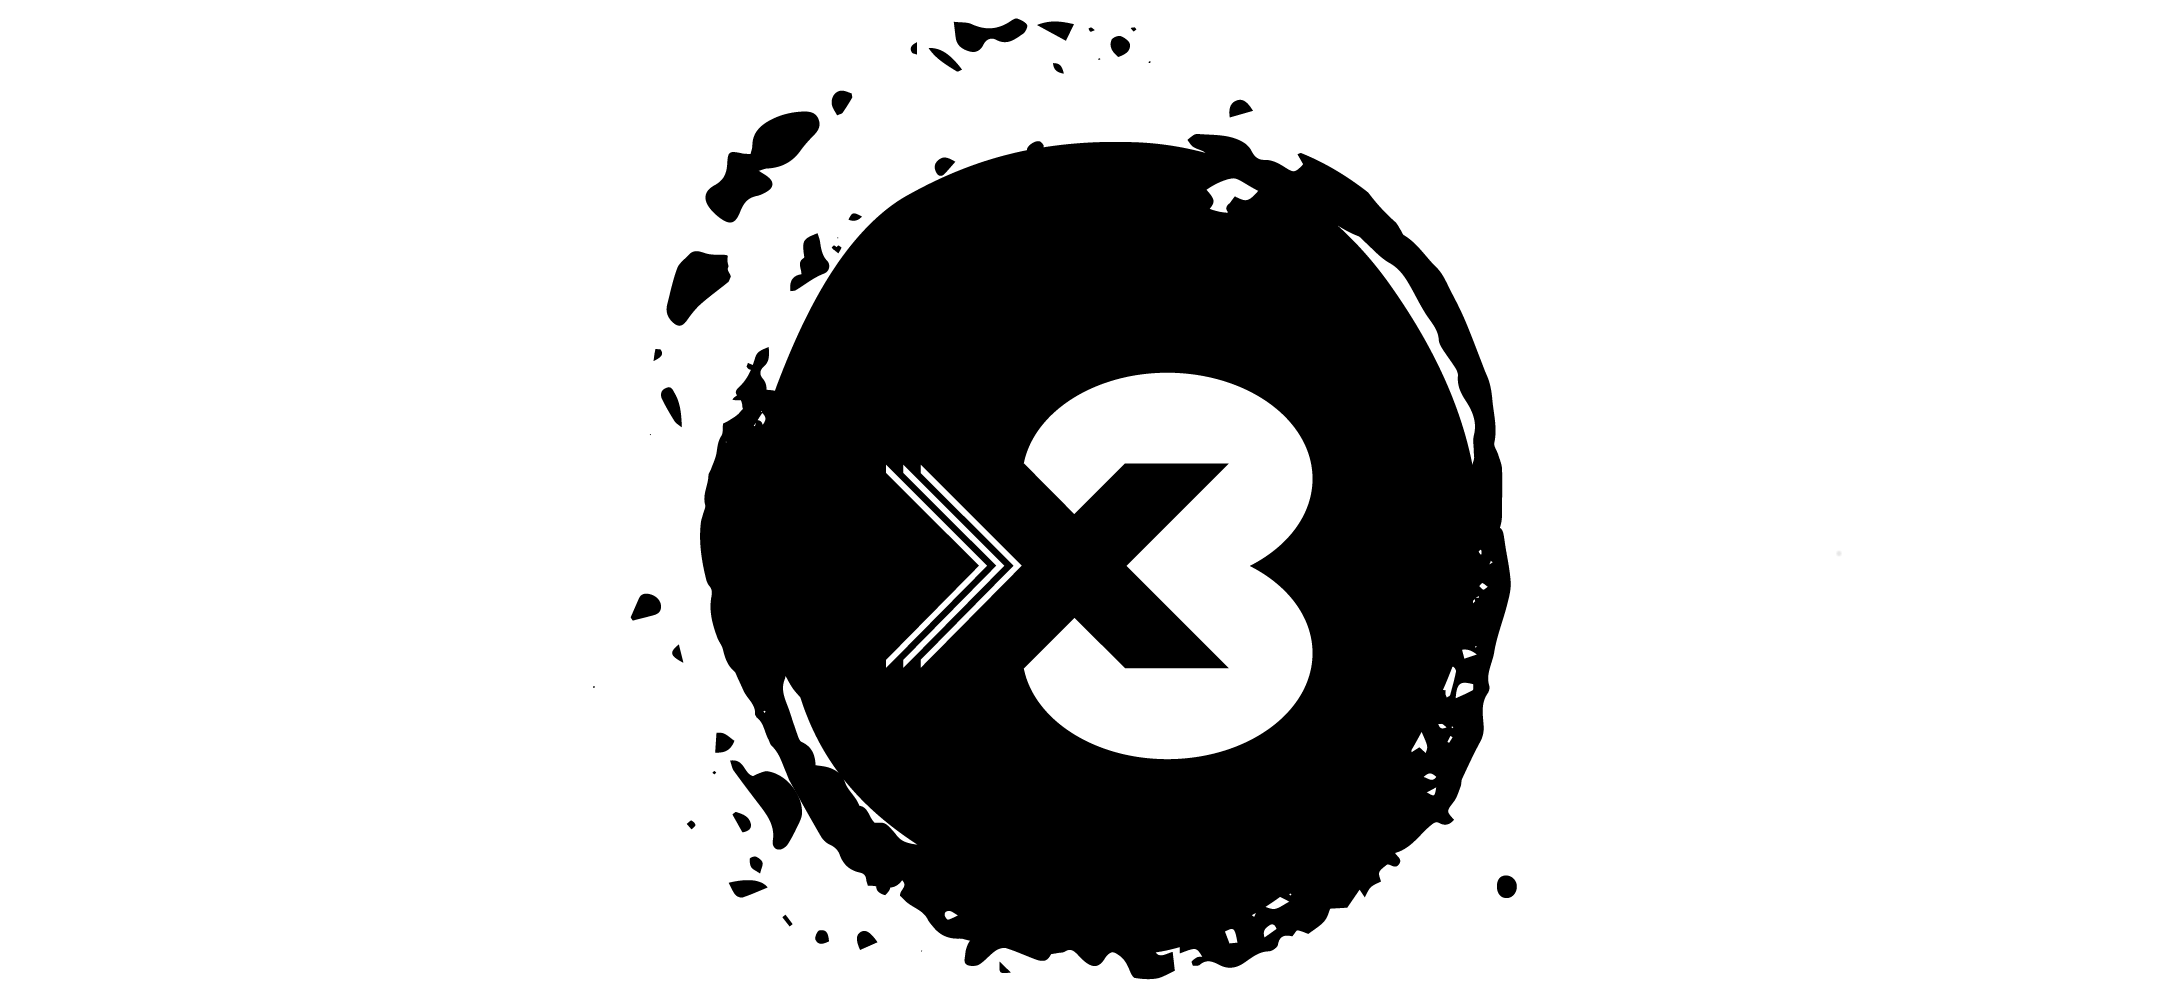 X3 Logo - X3 Training: Triathlon, Running, Cycling, Endurance Sport Coaching